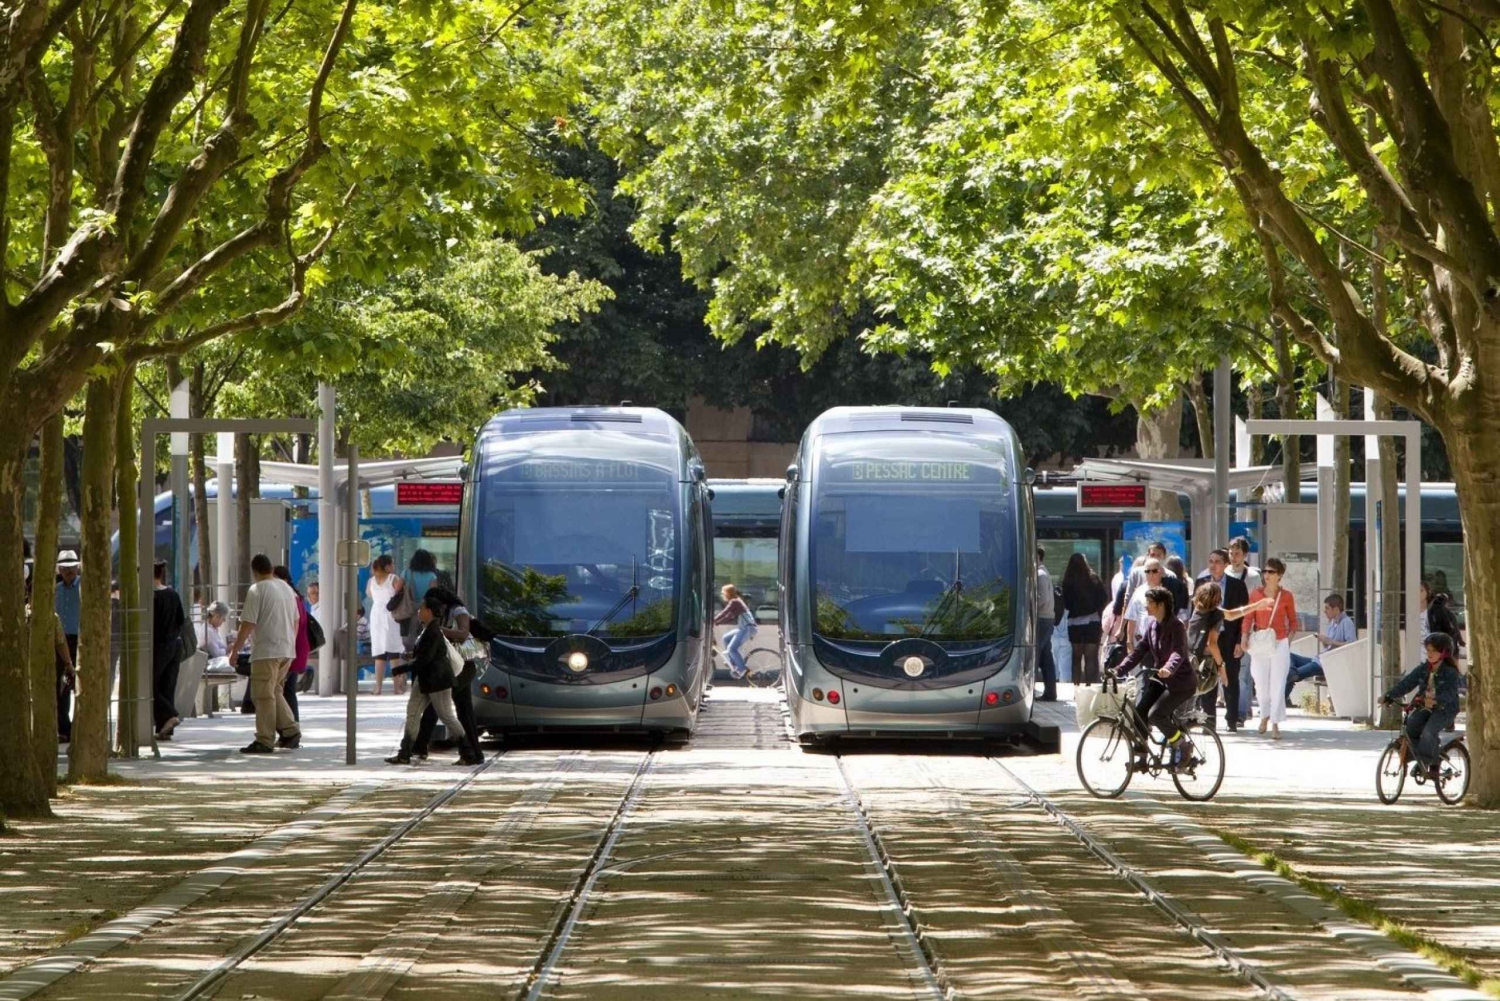 Bordeaux Metropole City Pass for 48 or 72 Hours